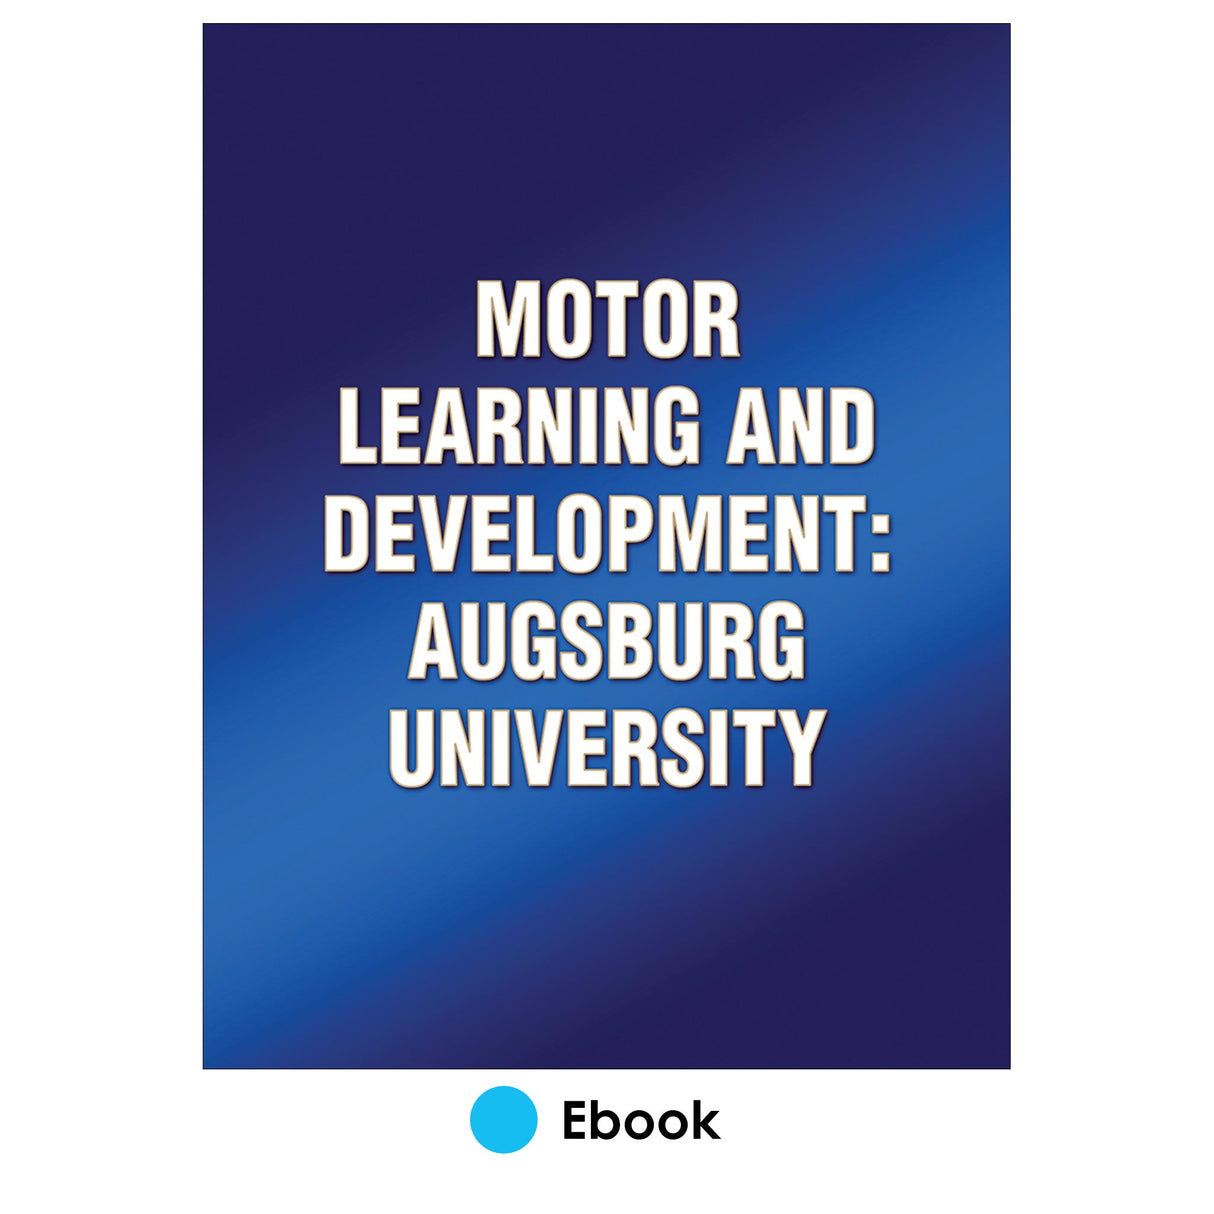 Motor Learning and Development: Augsburg University